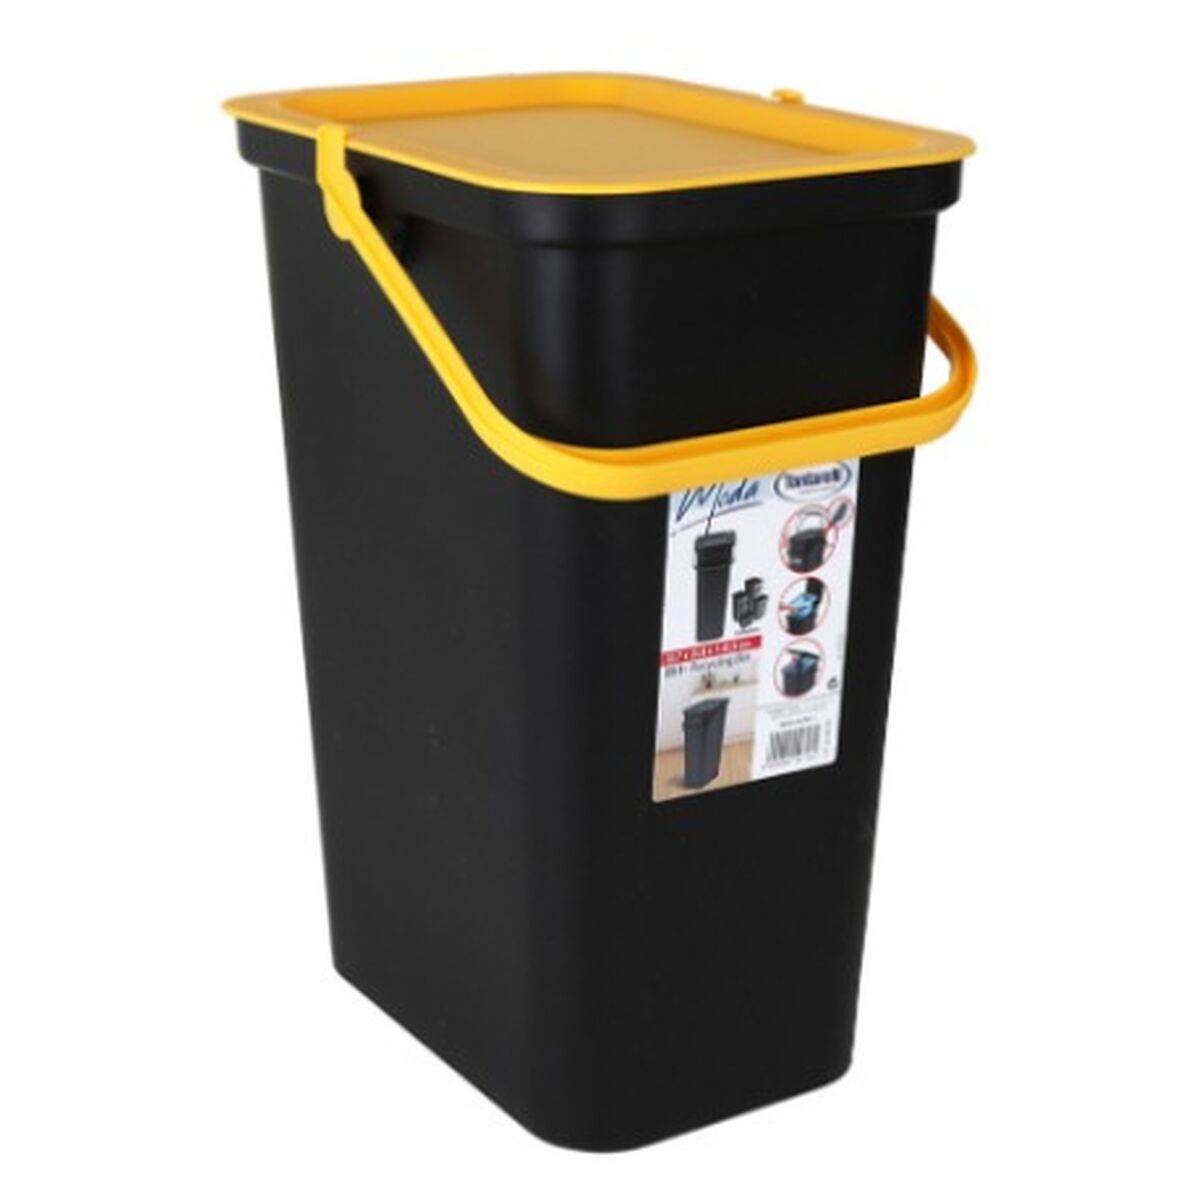 Recycling Waste Bin Tontarelli Moda 24 L Yellow Black (6 Units)